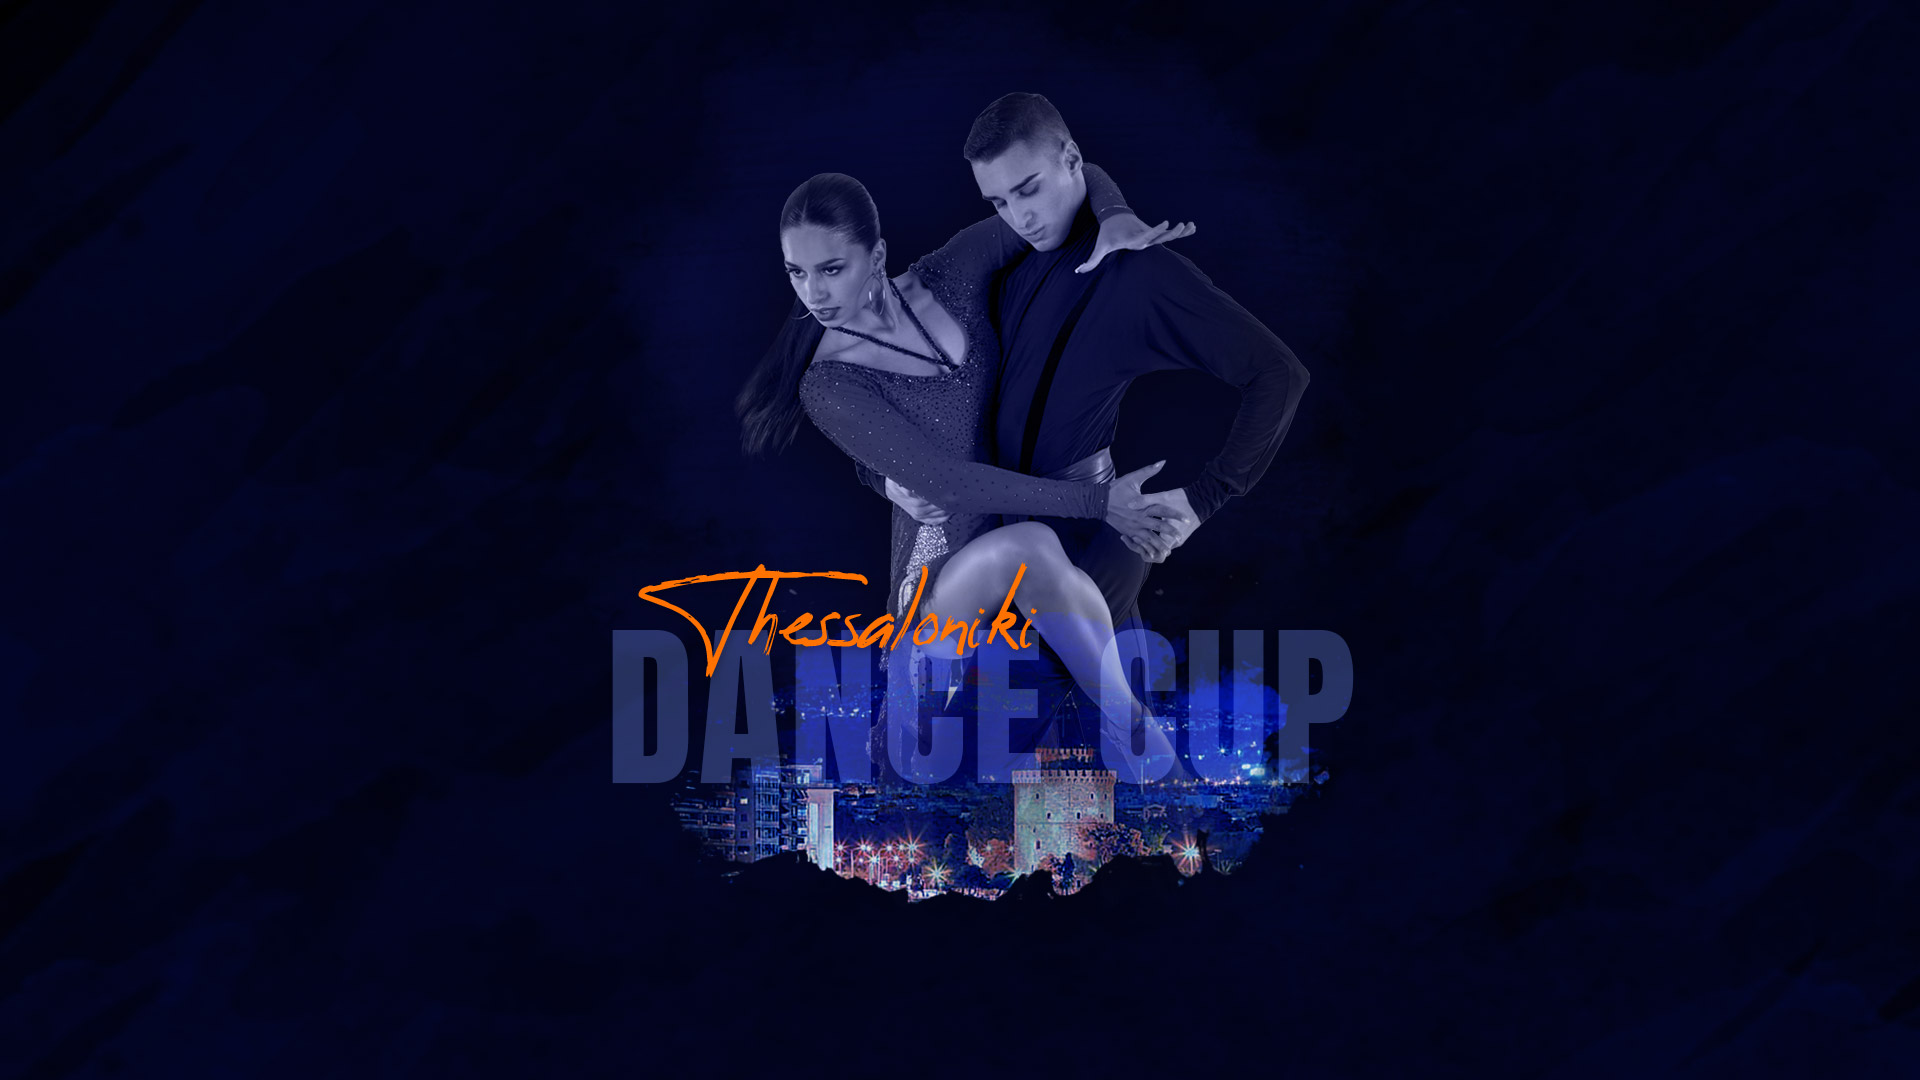 Thessaloniki Dance Cup